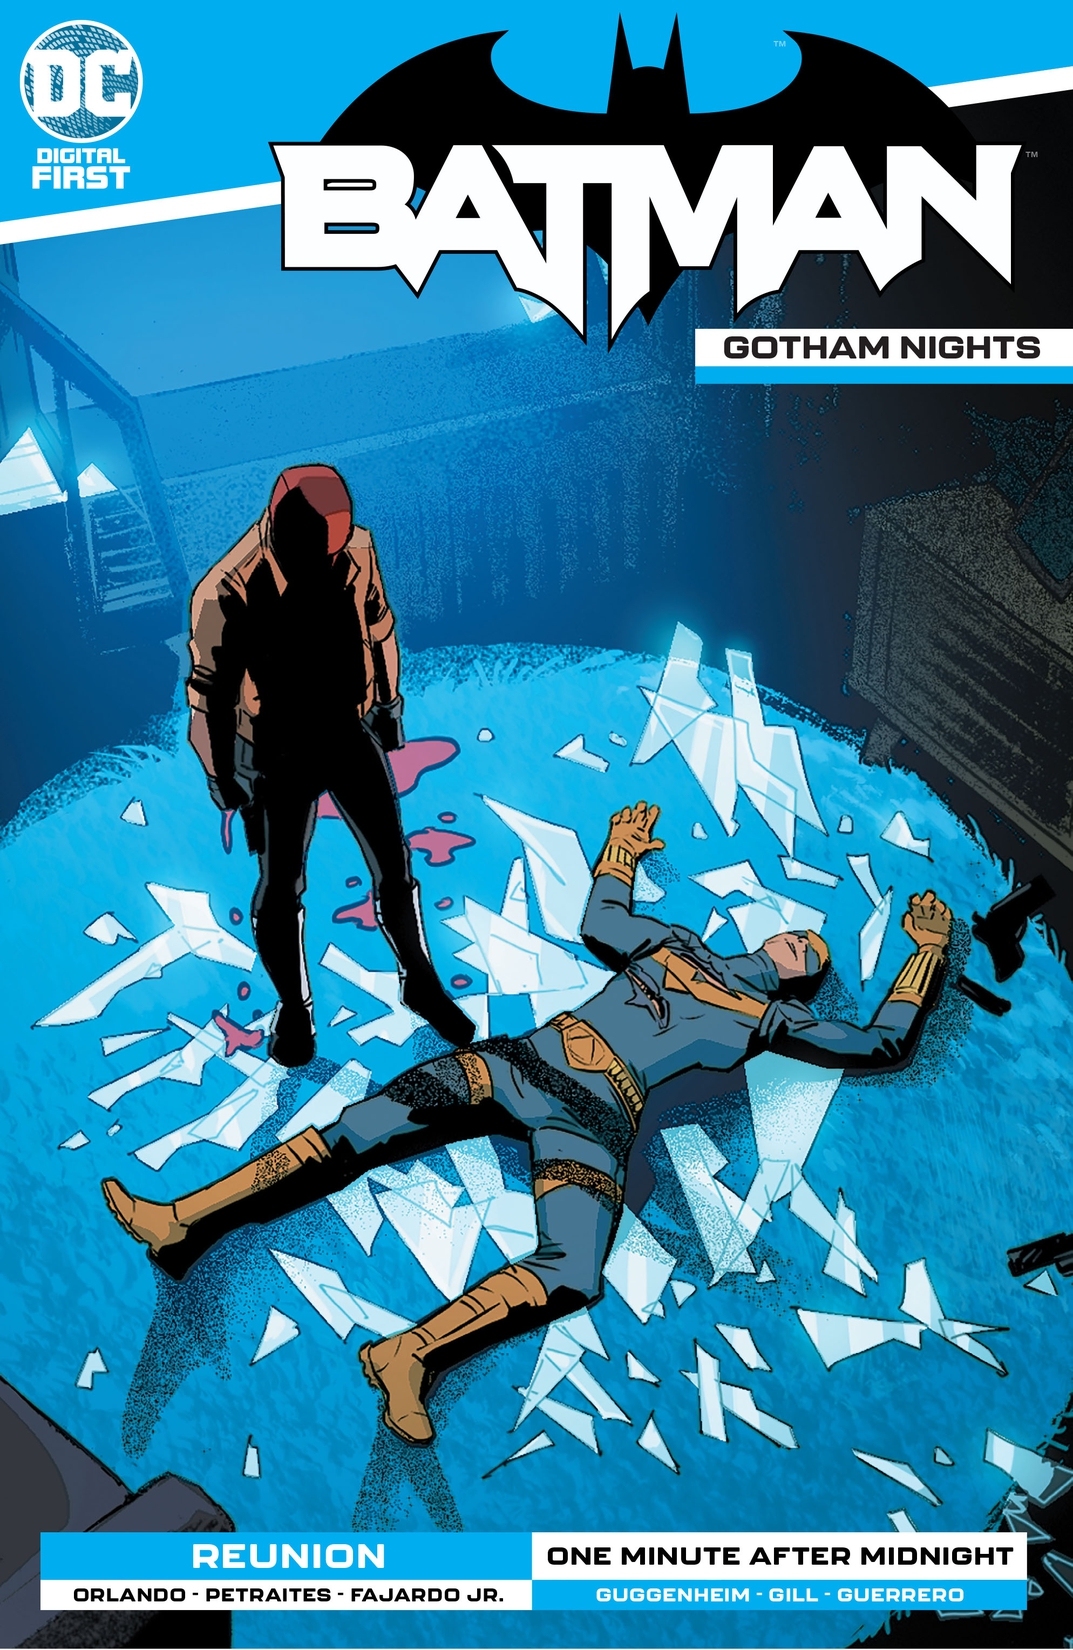 Batman: Gotham Nights #11 preview images